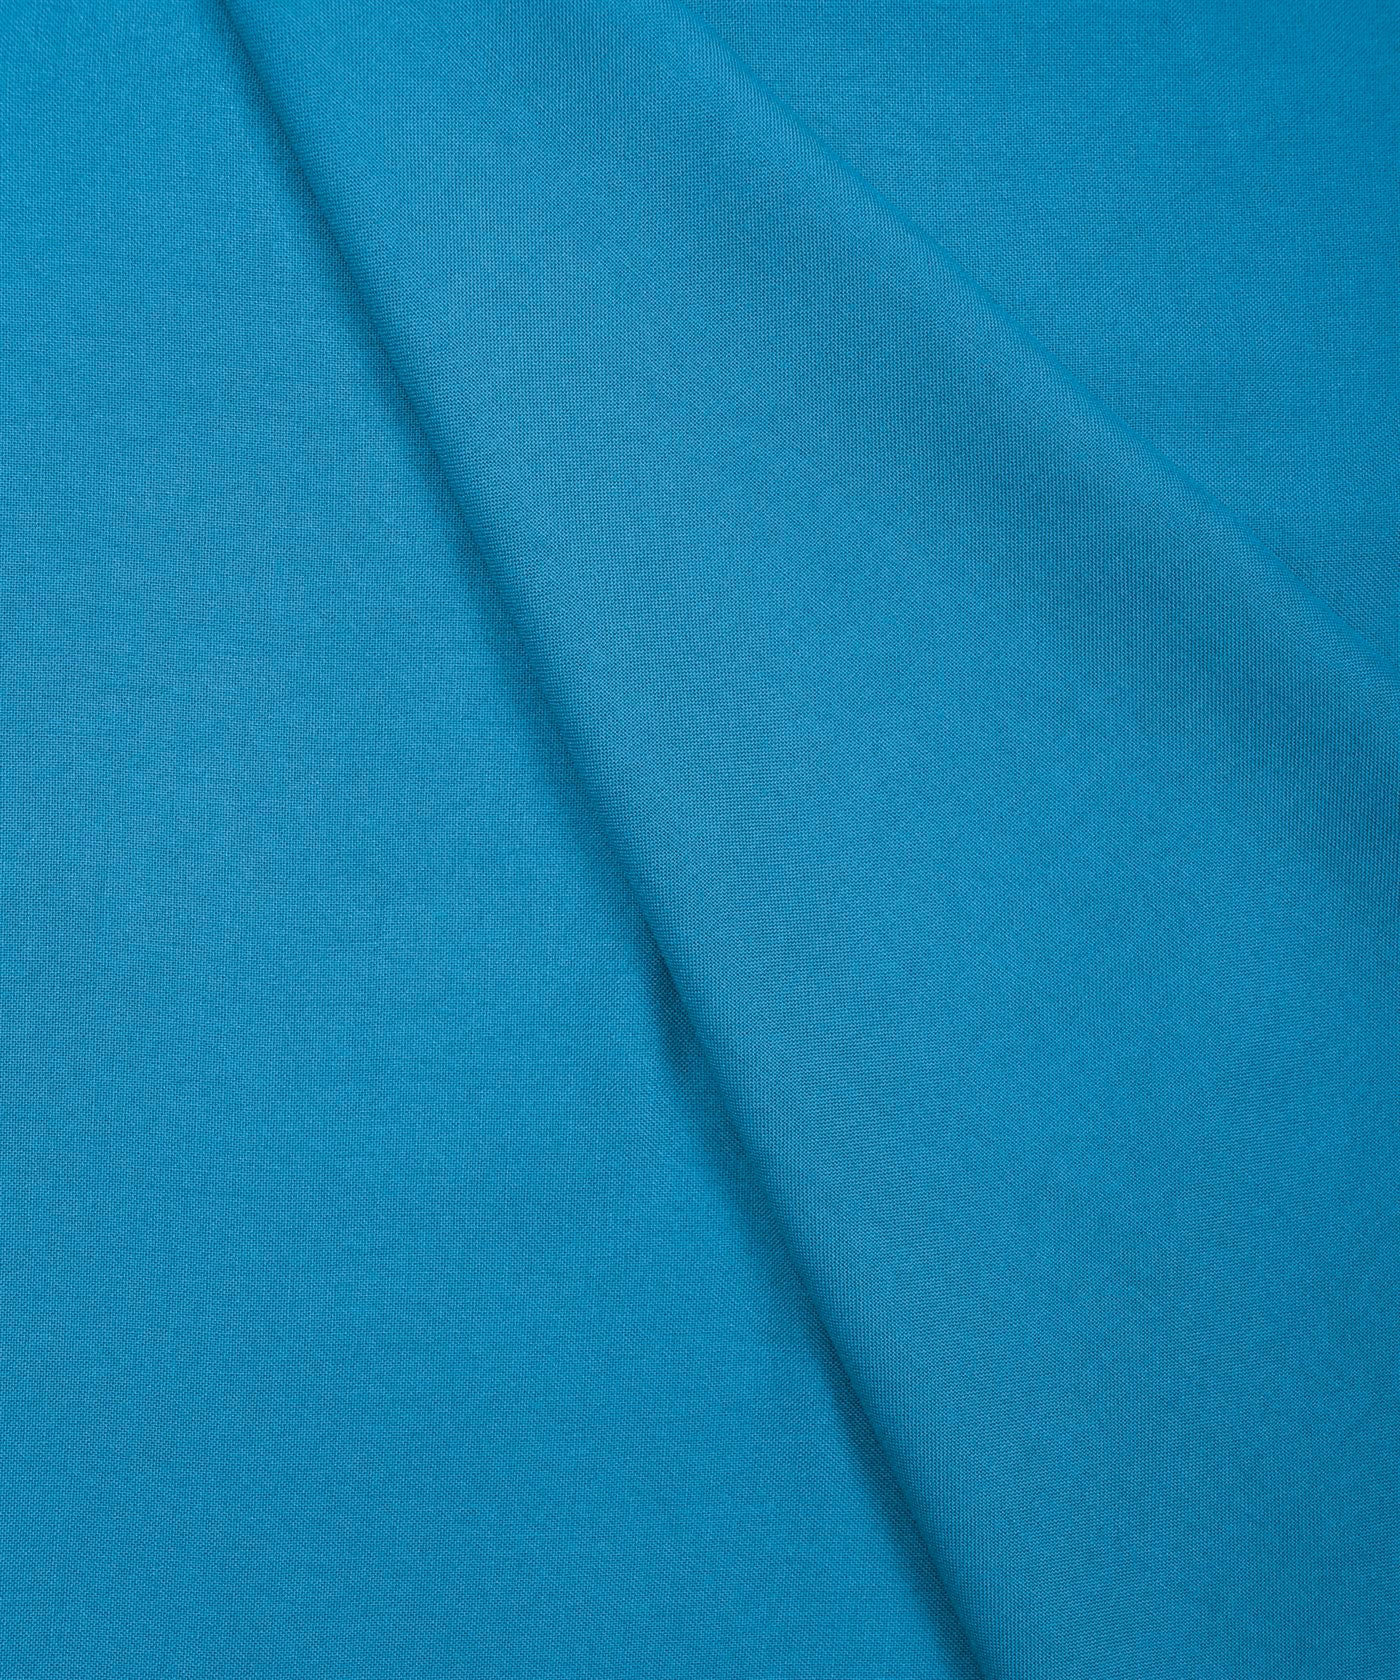 Blue Plain Dyed Rayon Fabric